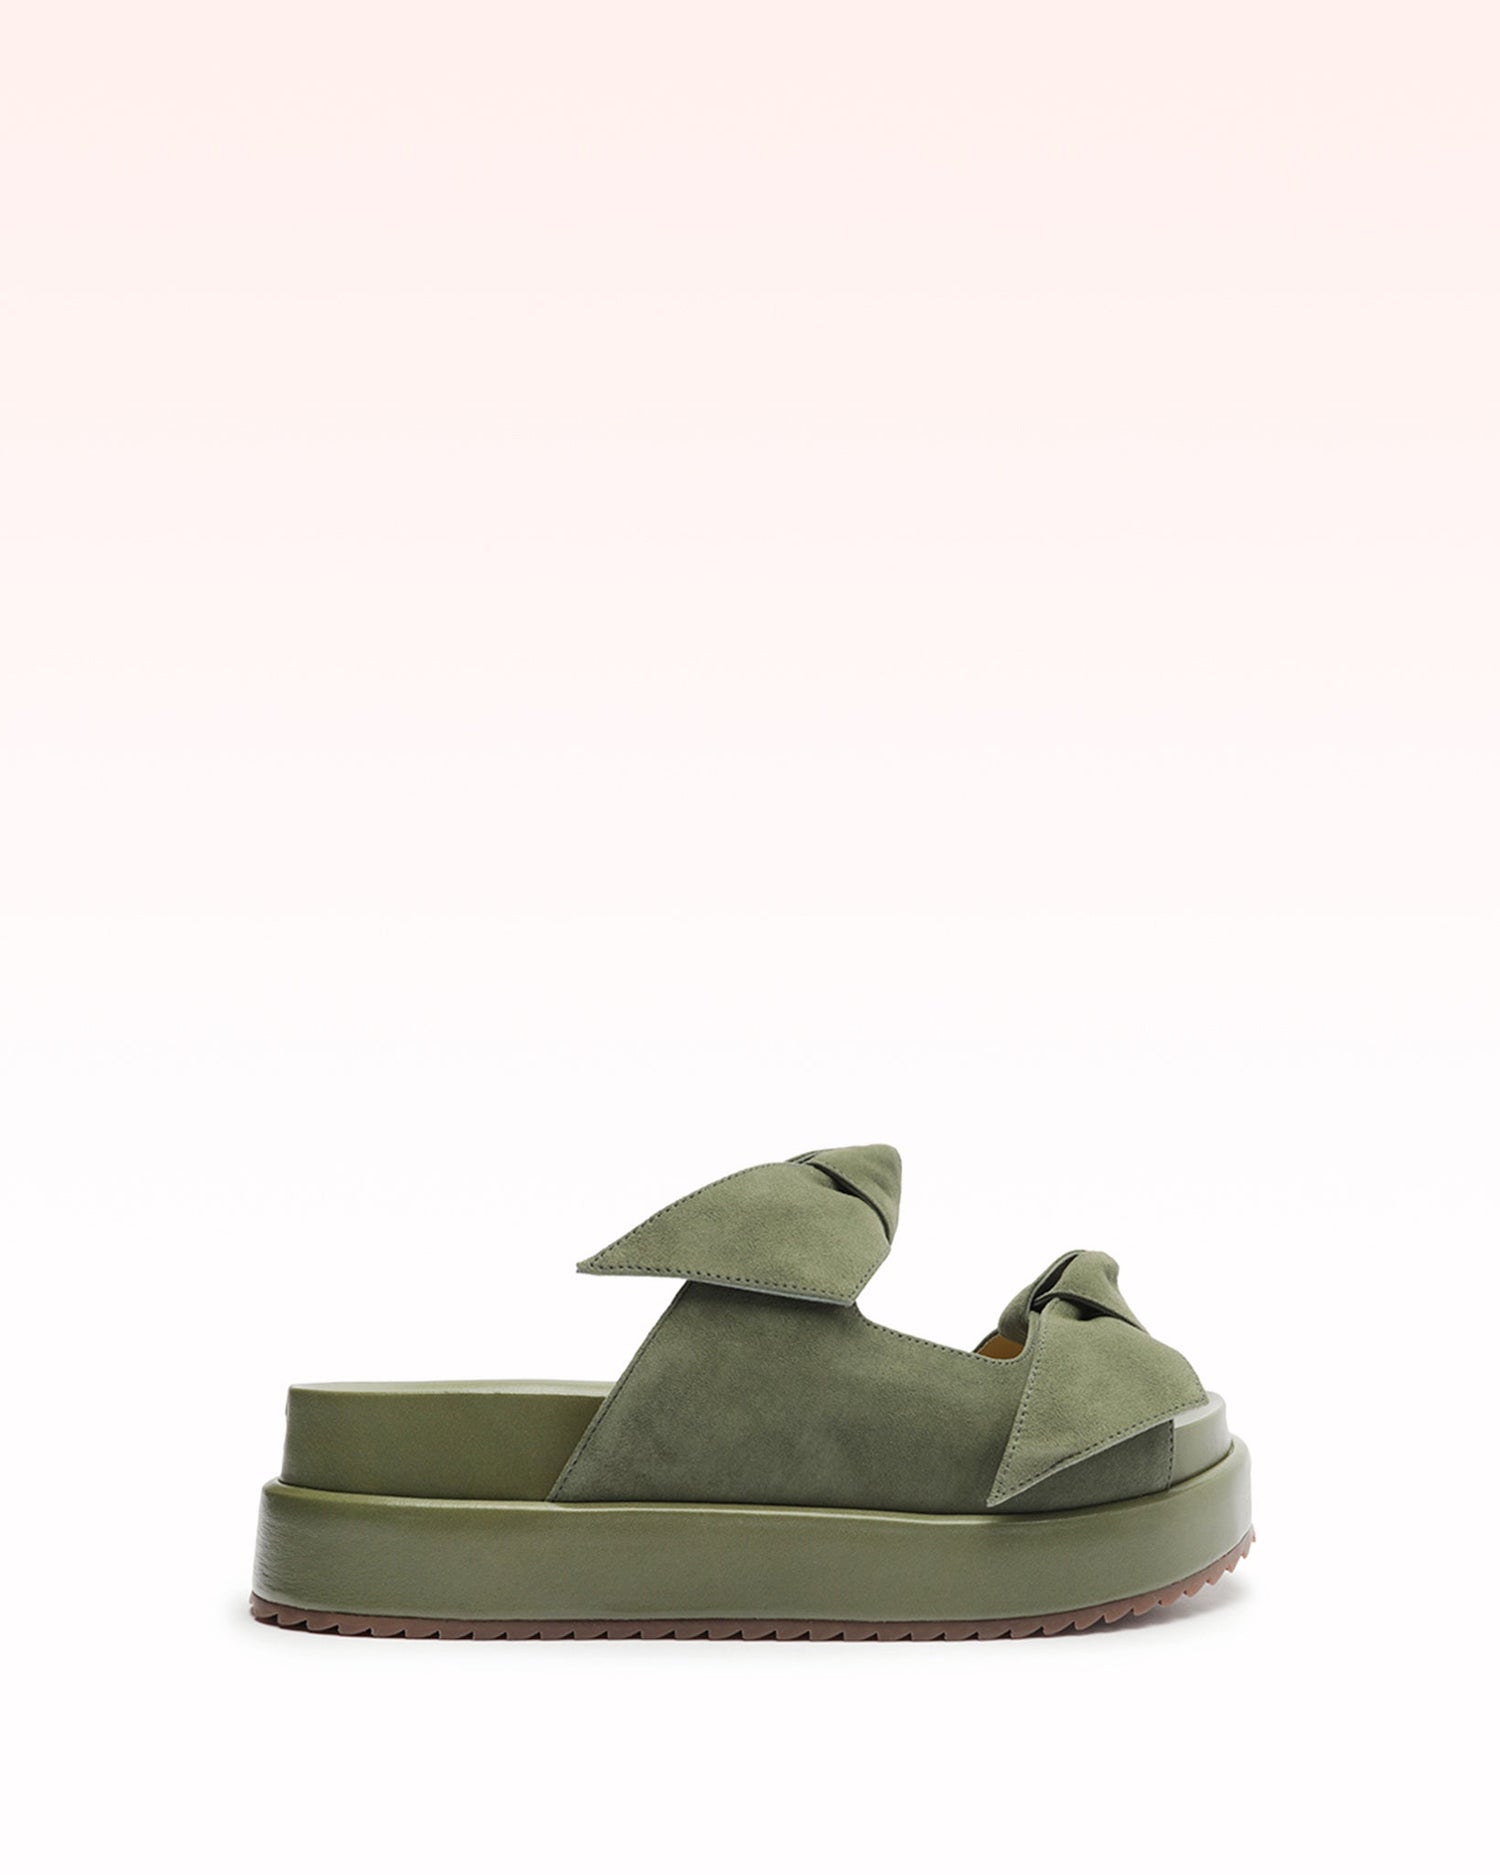 Asymmetric Clarita Bounce Green Tea Sandal Flats Sale 35 Green Tea Suede & Nappa Leather